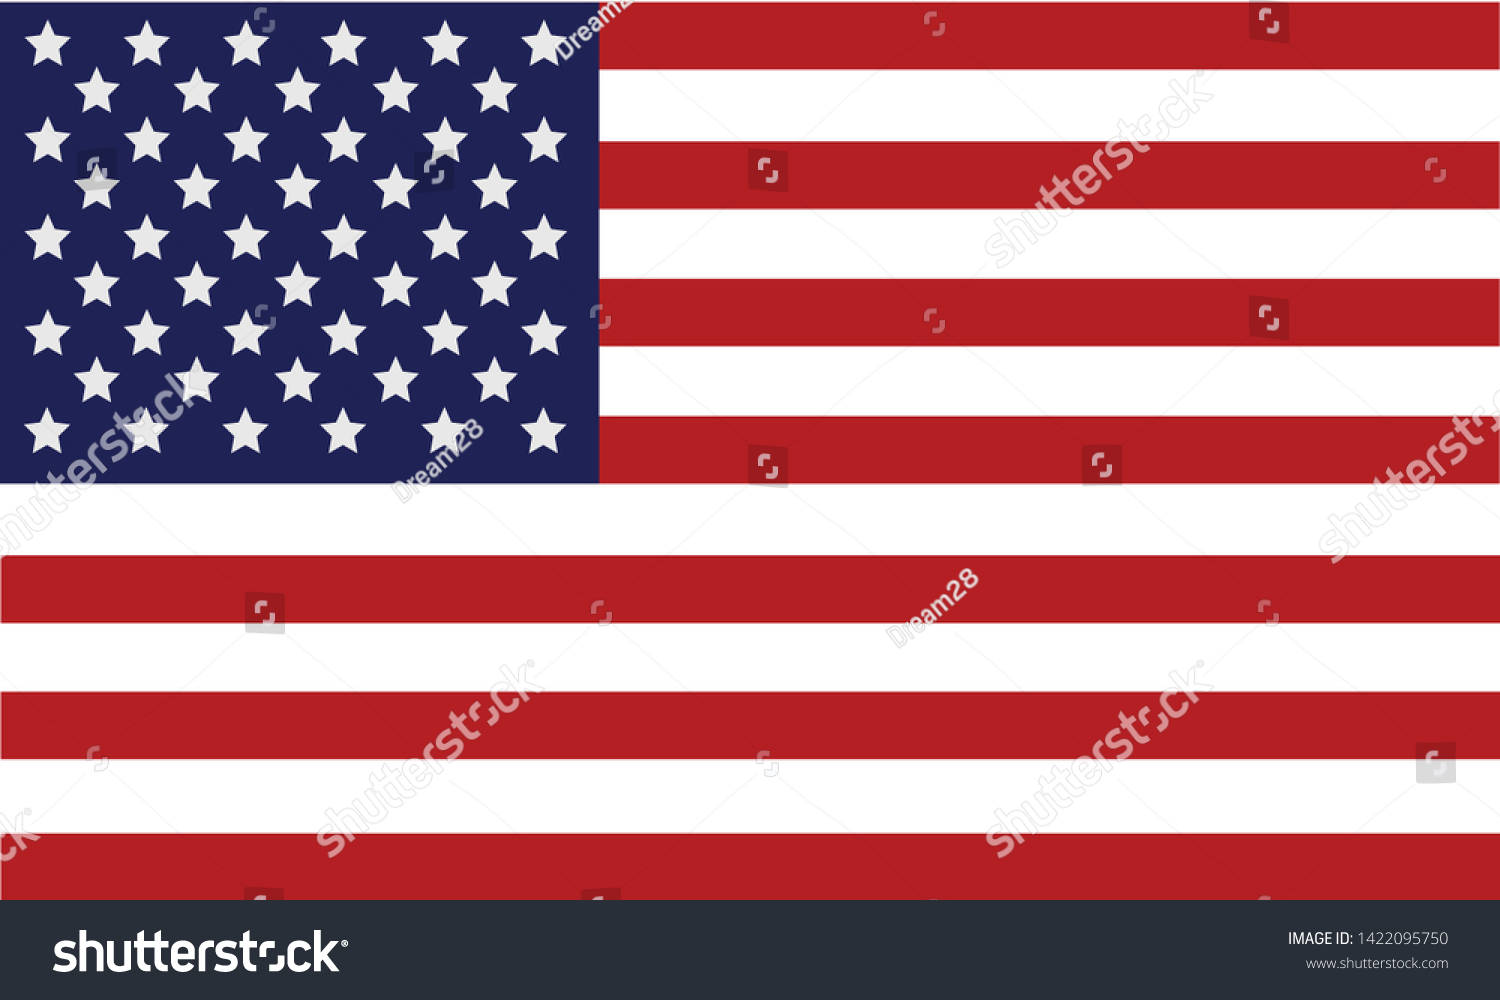 American Flag 4th july illustration #1422095750